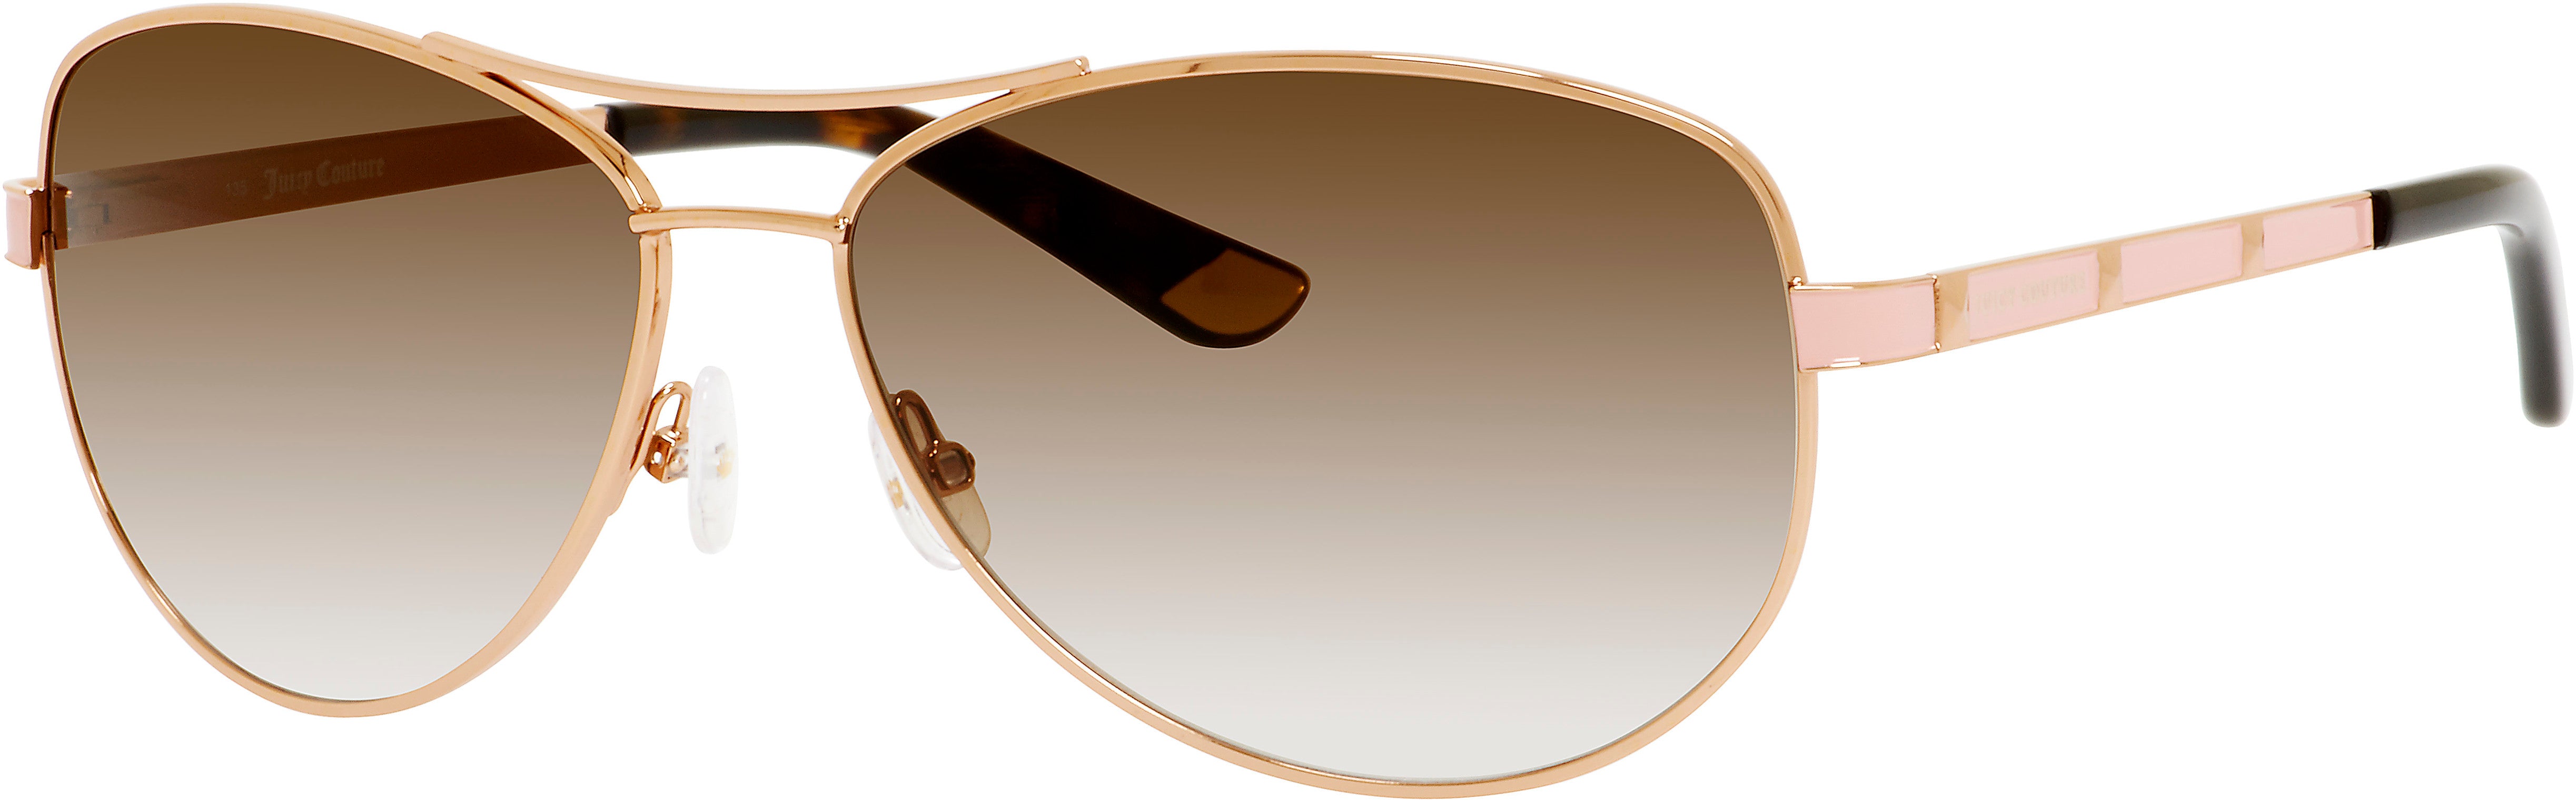 Juicy Couture Juicy 554/S Aviator Sunglasses 0AU2-0AU2  Rose Gold (Y6 Brown Gradient)